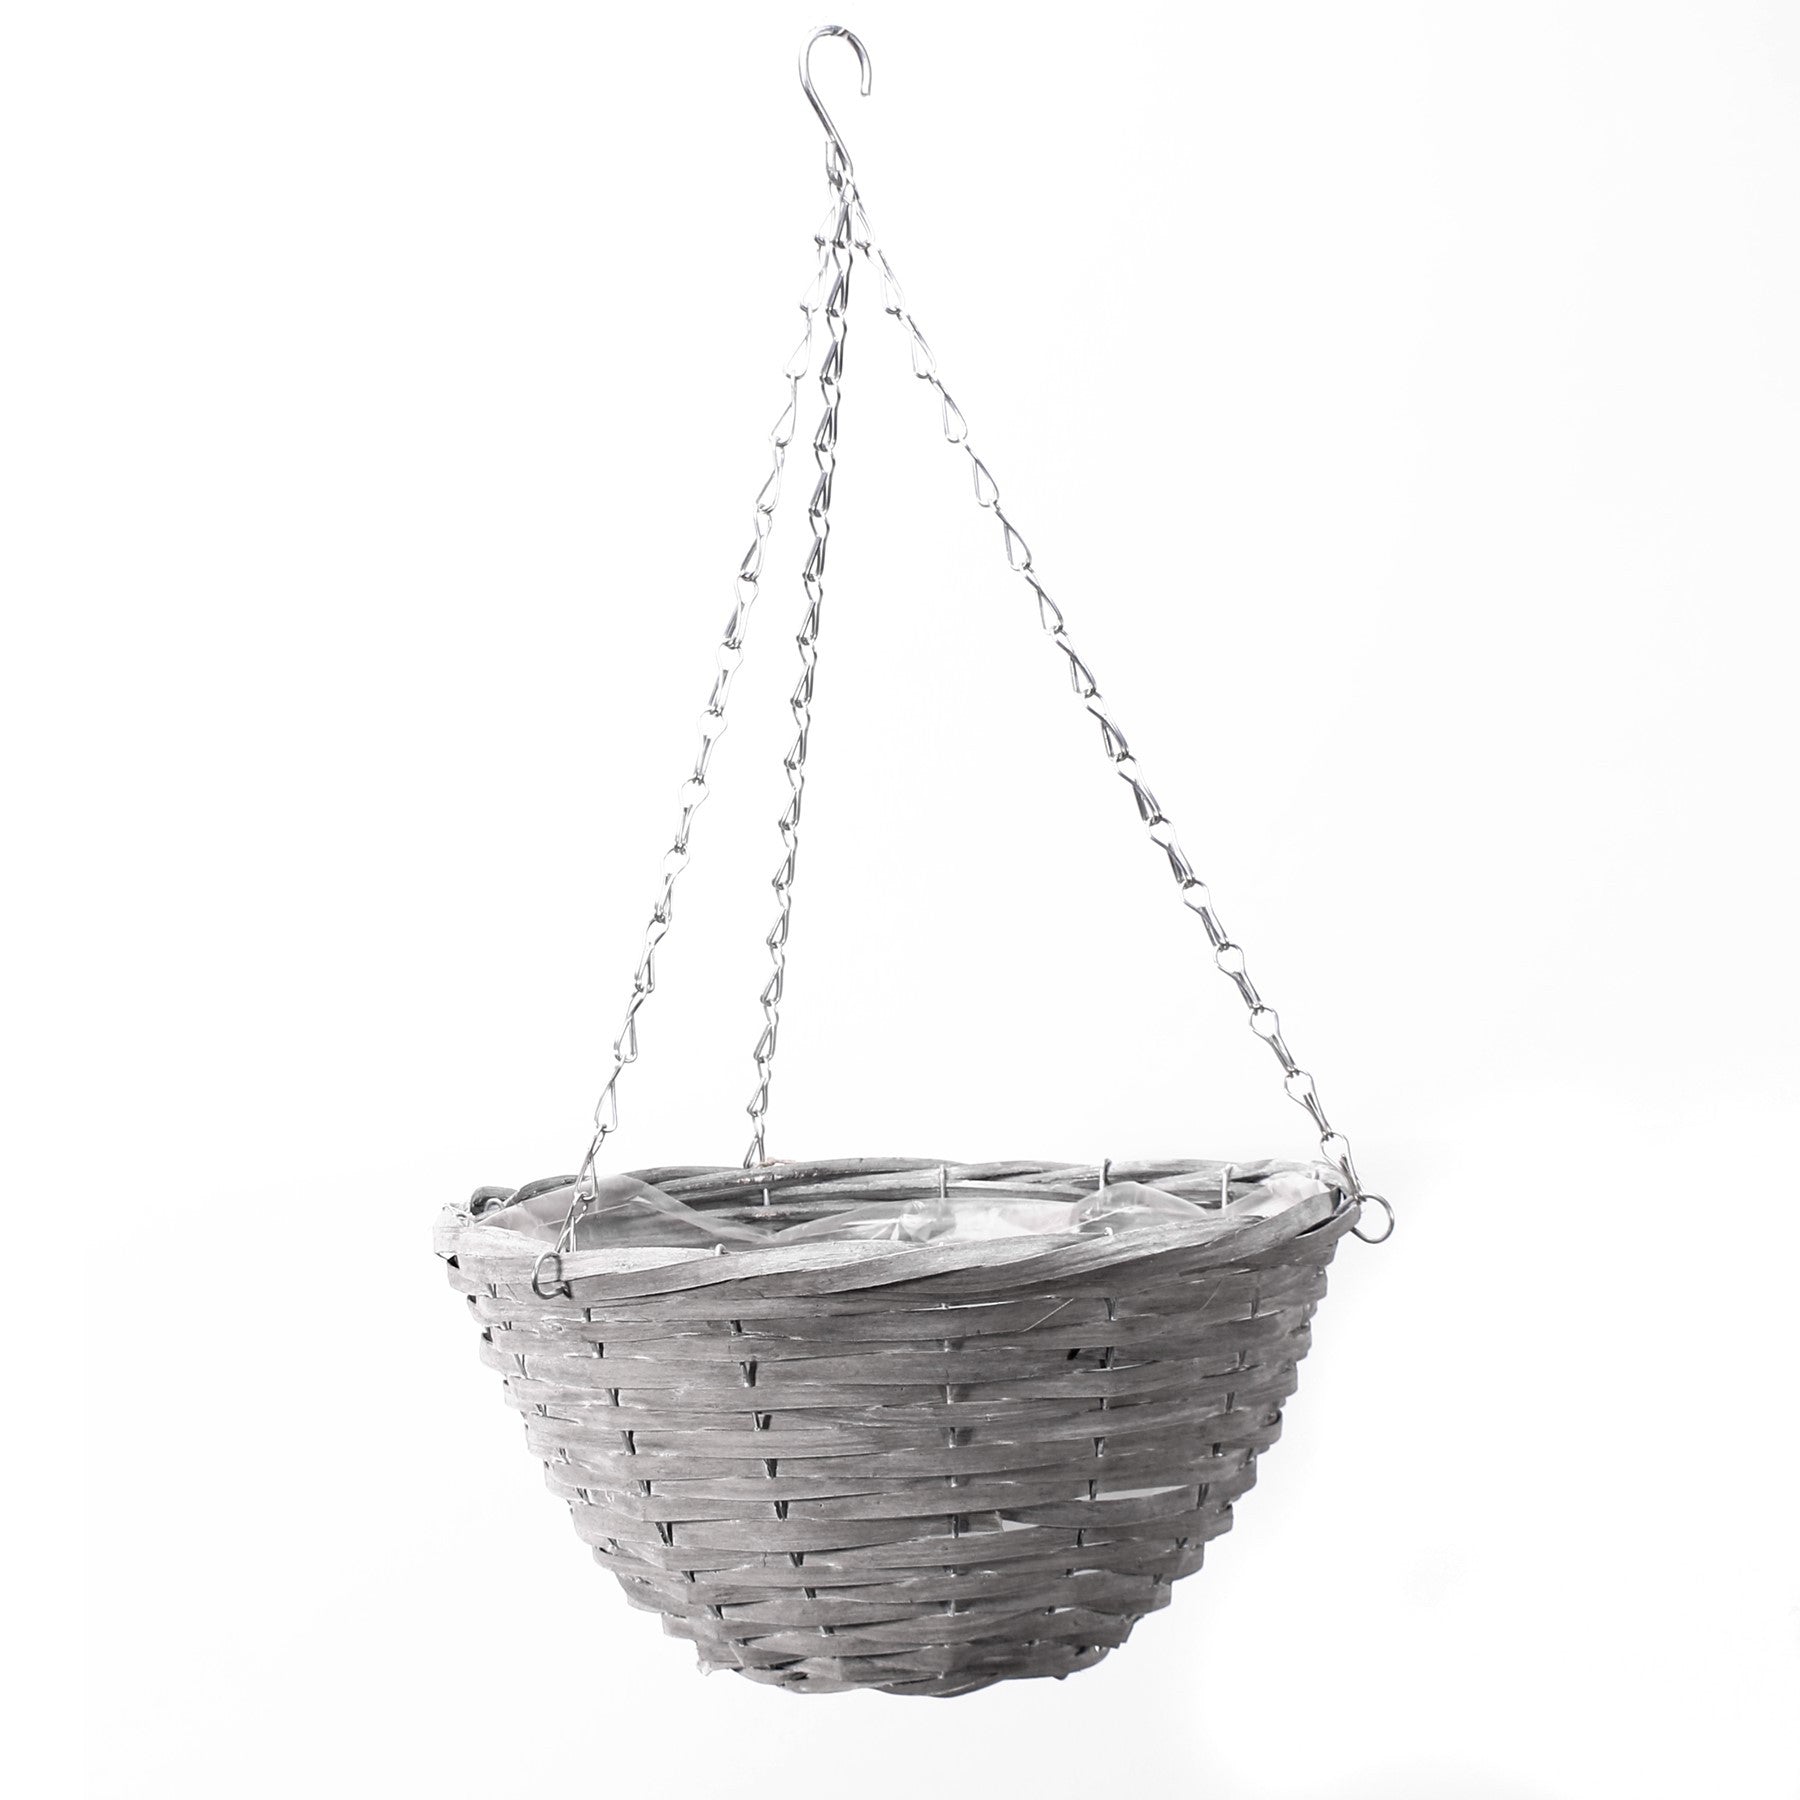 View Grey Wash Round Woodhouse Hanging Basket information